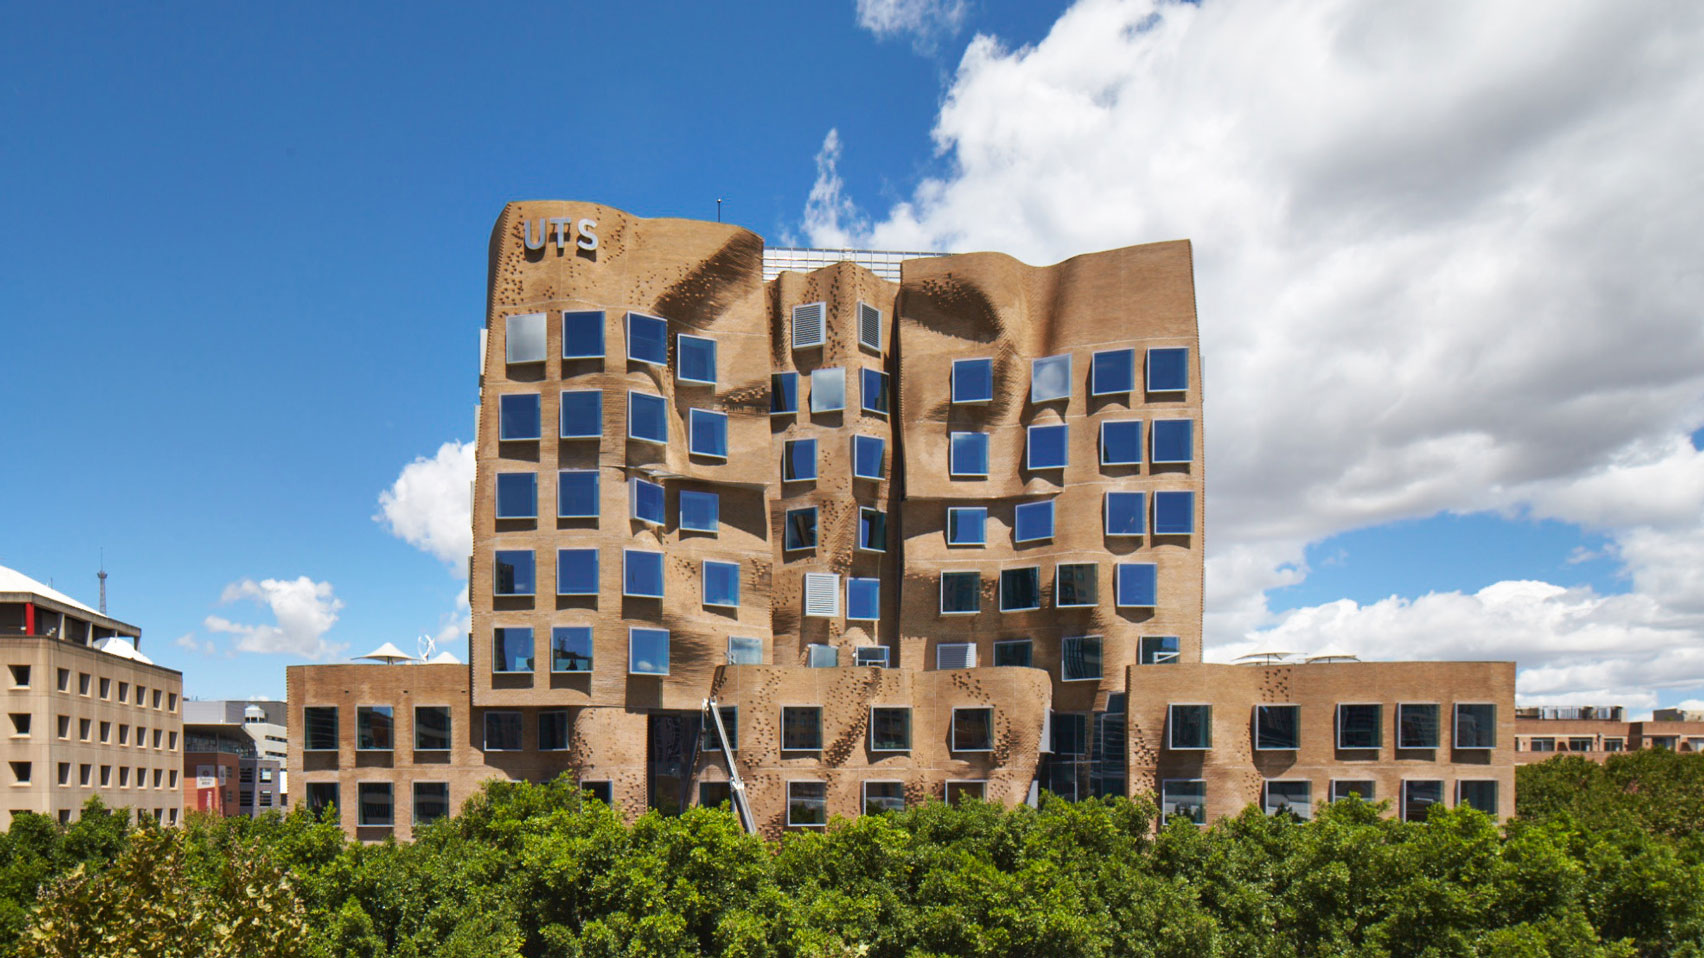 UTS-Business-School-by-Frank-Gehry_dezeen_hero-a.jpg